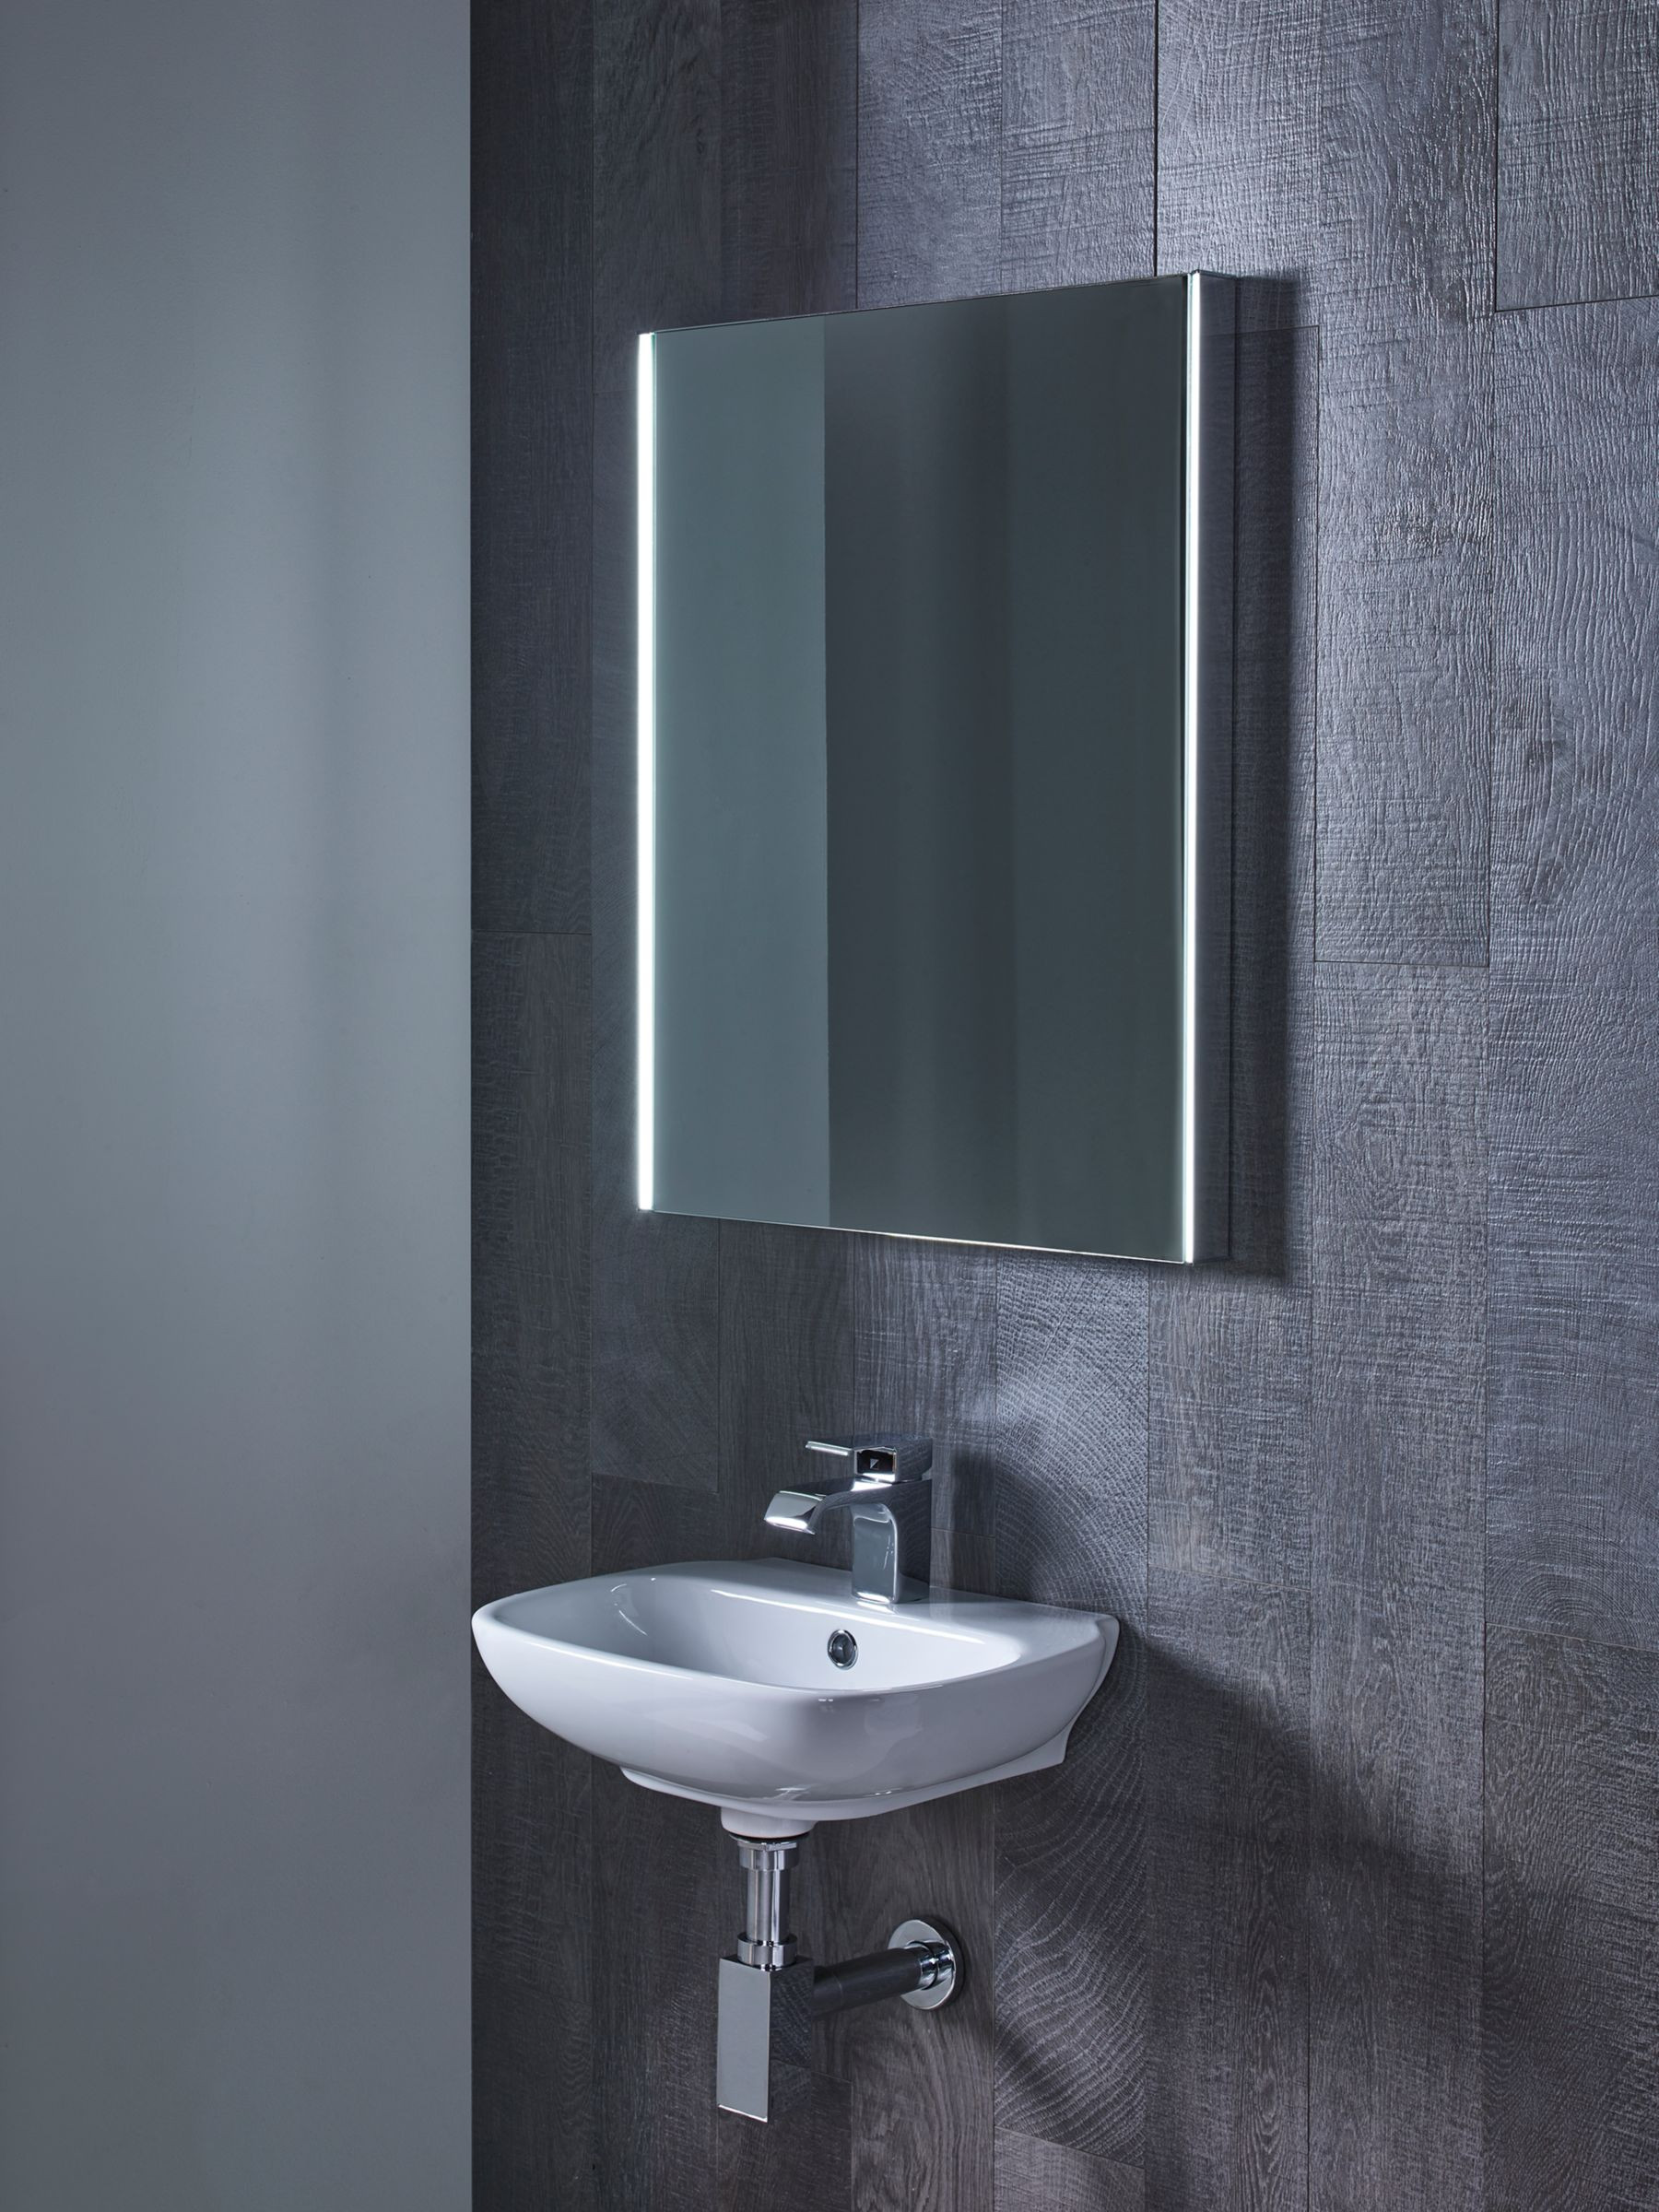 Bathroom Mirrors Online
 Roper Rhodes Precise Illuminated Bathroom Mirror at John Lewis